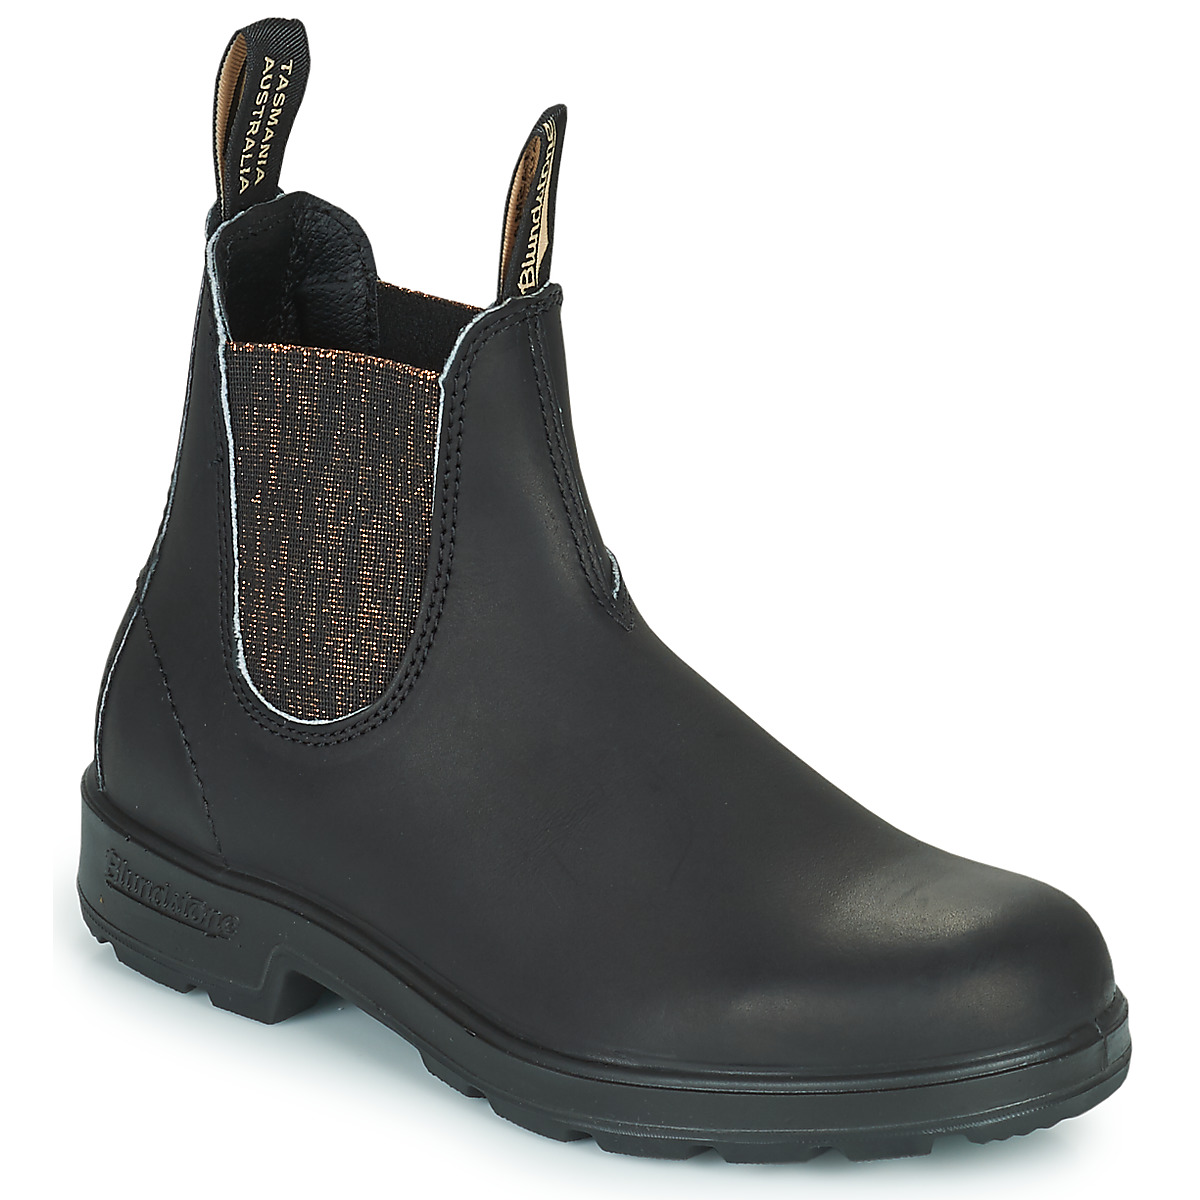 Schuhe Damen Boots Blundstone ORIGINAL CHELSEA BOOTS Schwarz / Bronze